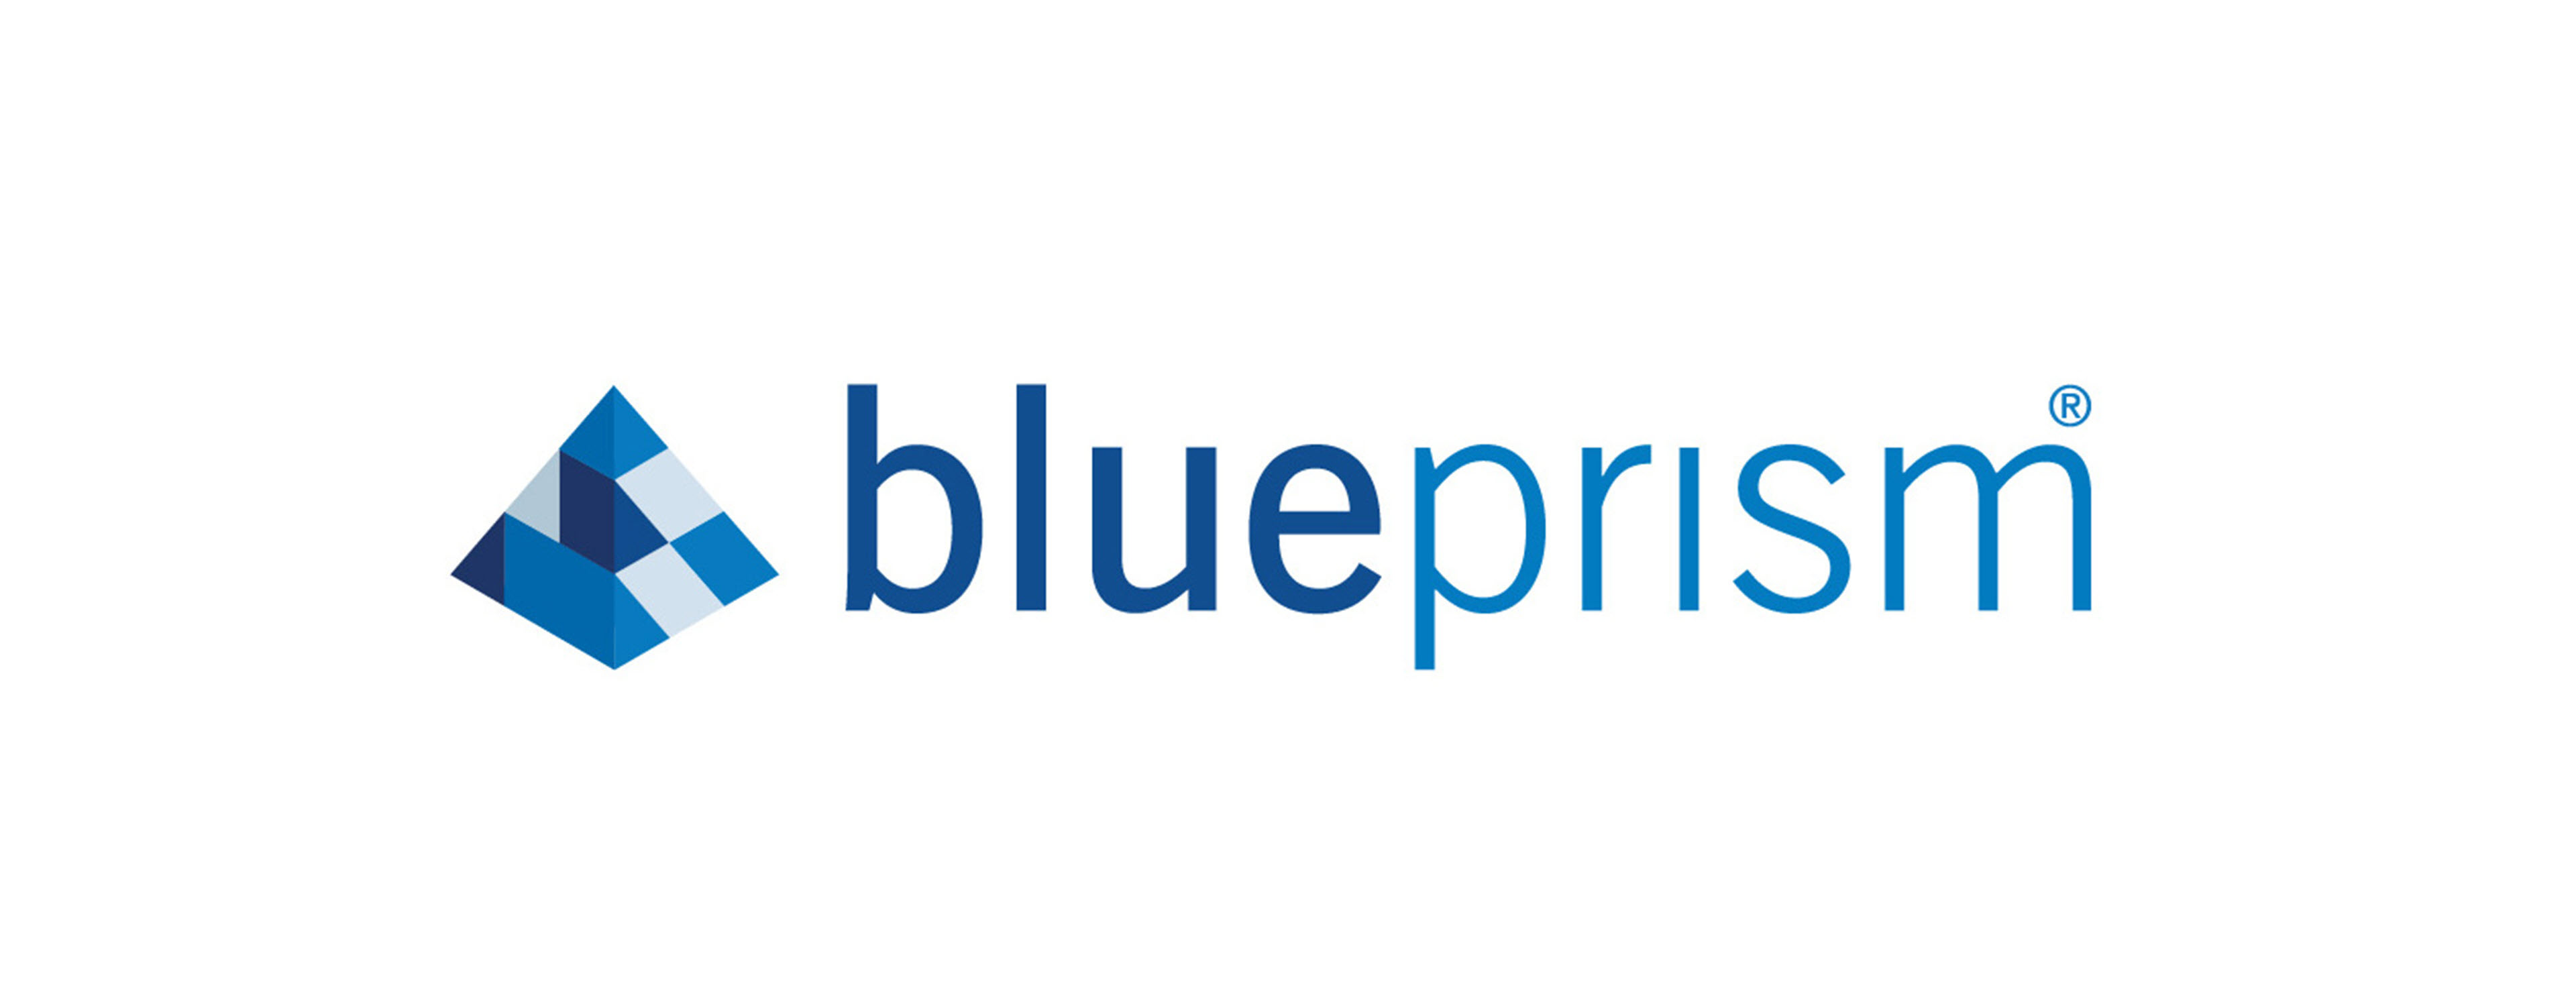 El logo de Blueprism